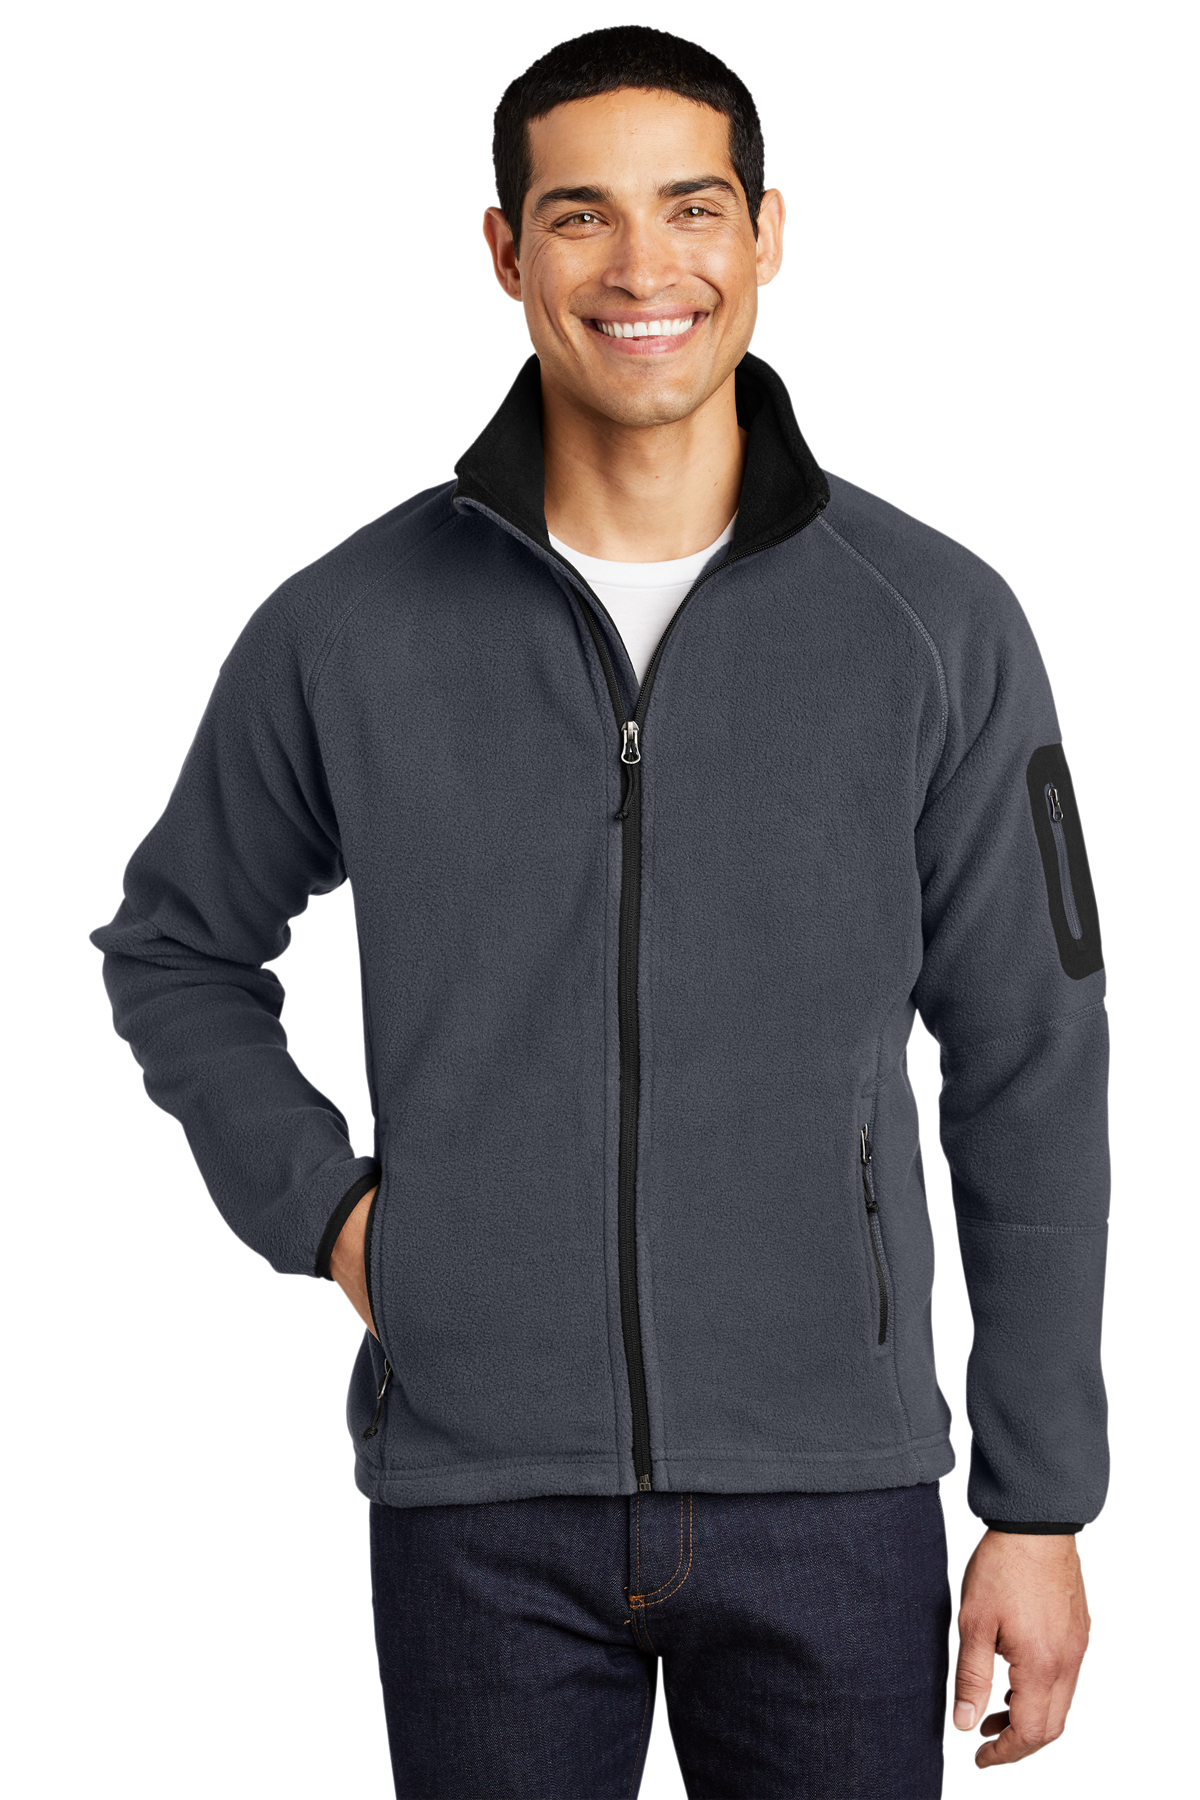 Port Authority Enhanced Value Fleece Full-Zip Jacket | Product | Port ...